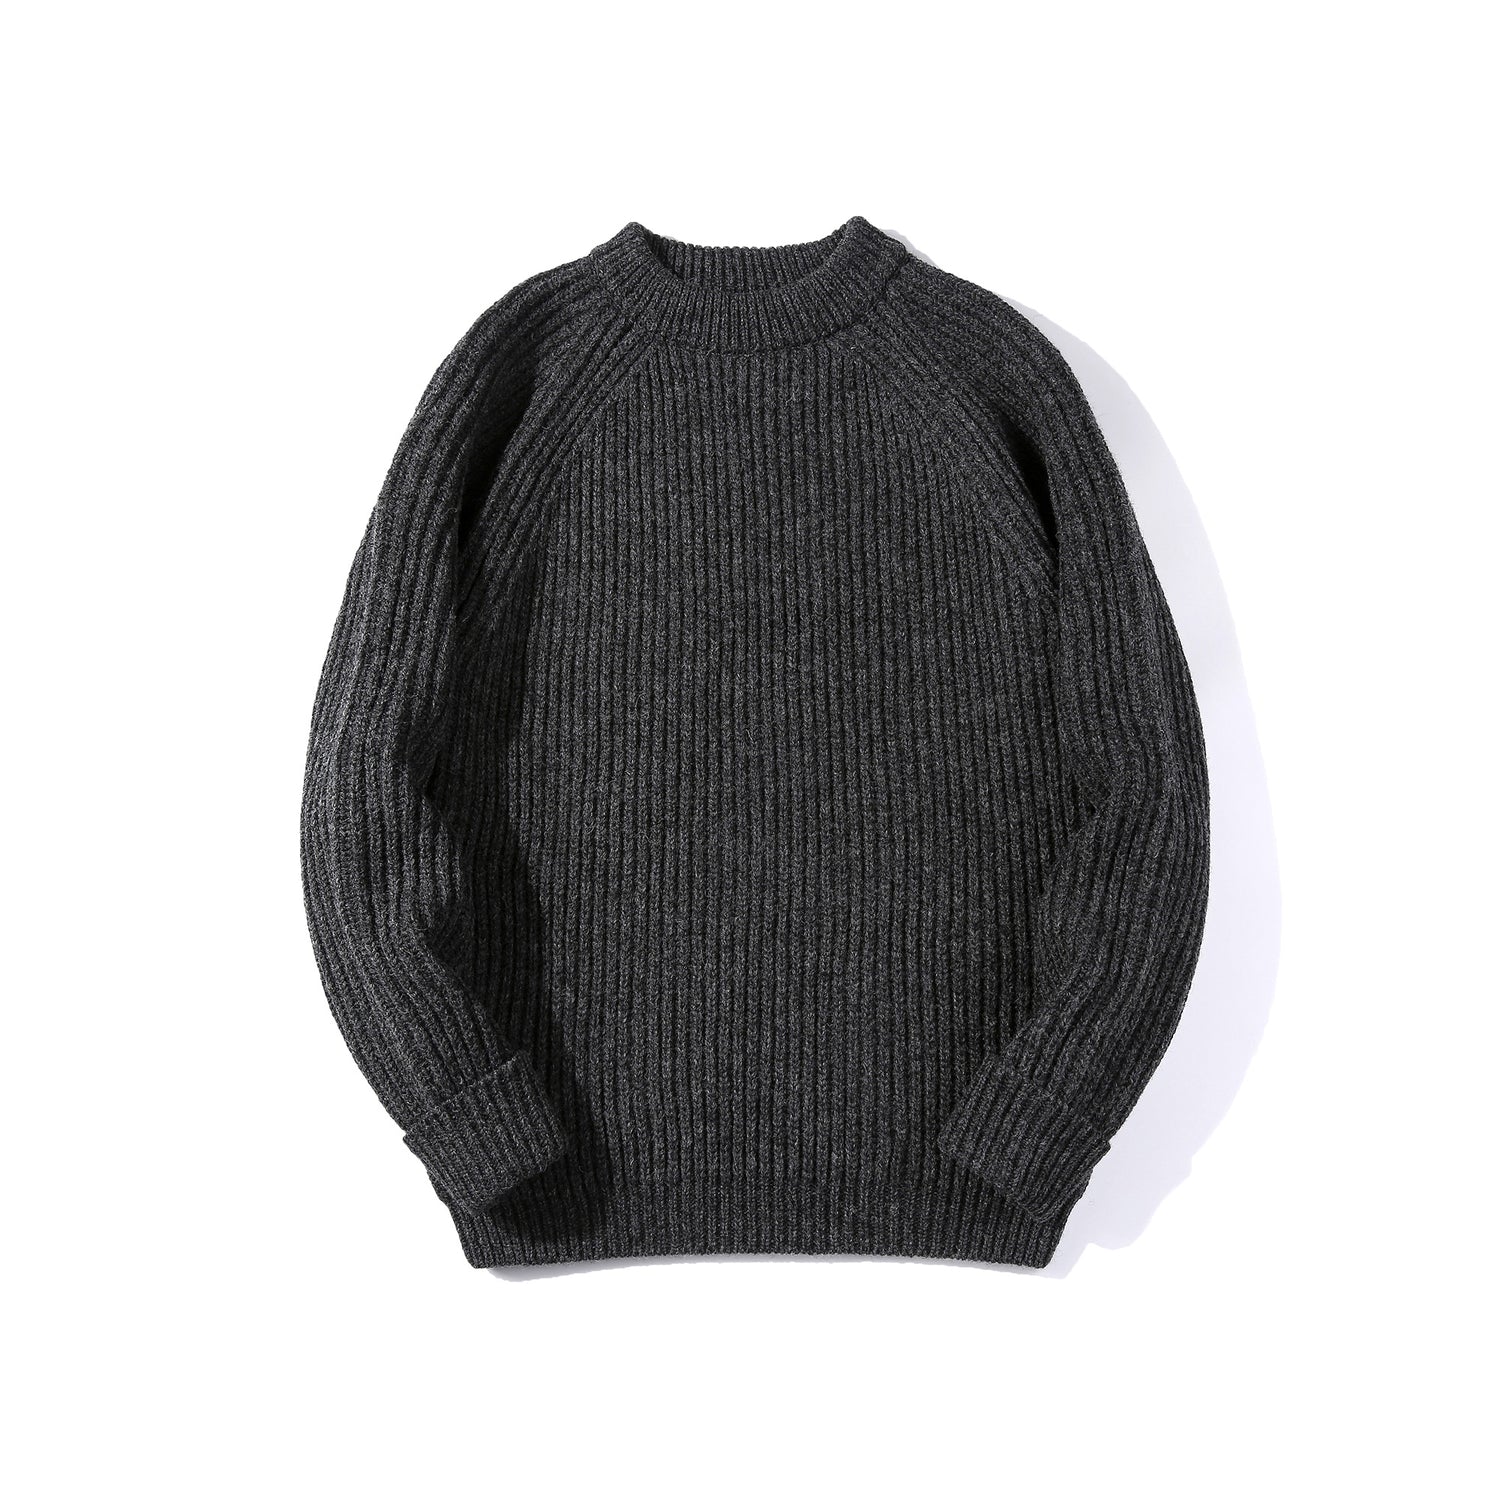 Boncoura Heavy Woolen "Fisherman" Sweater (Charcoal)